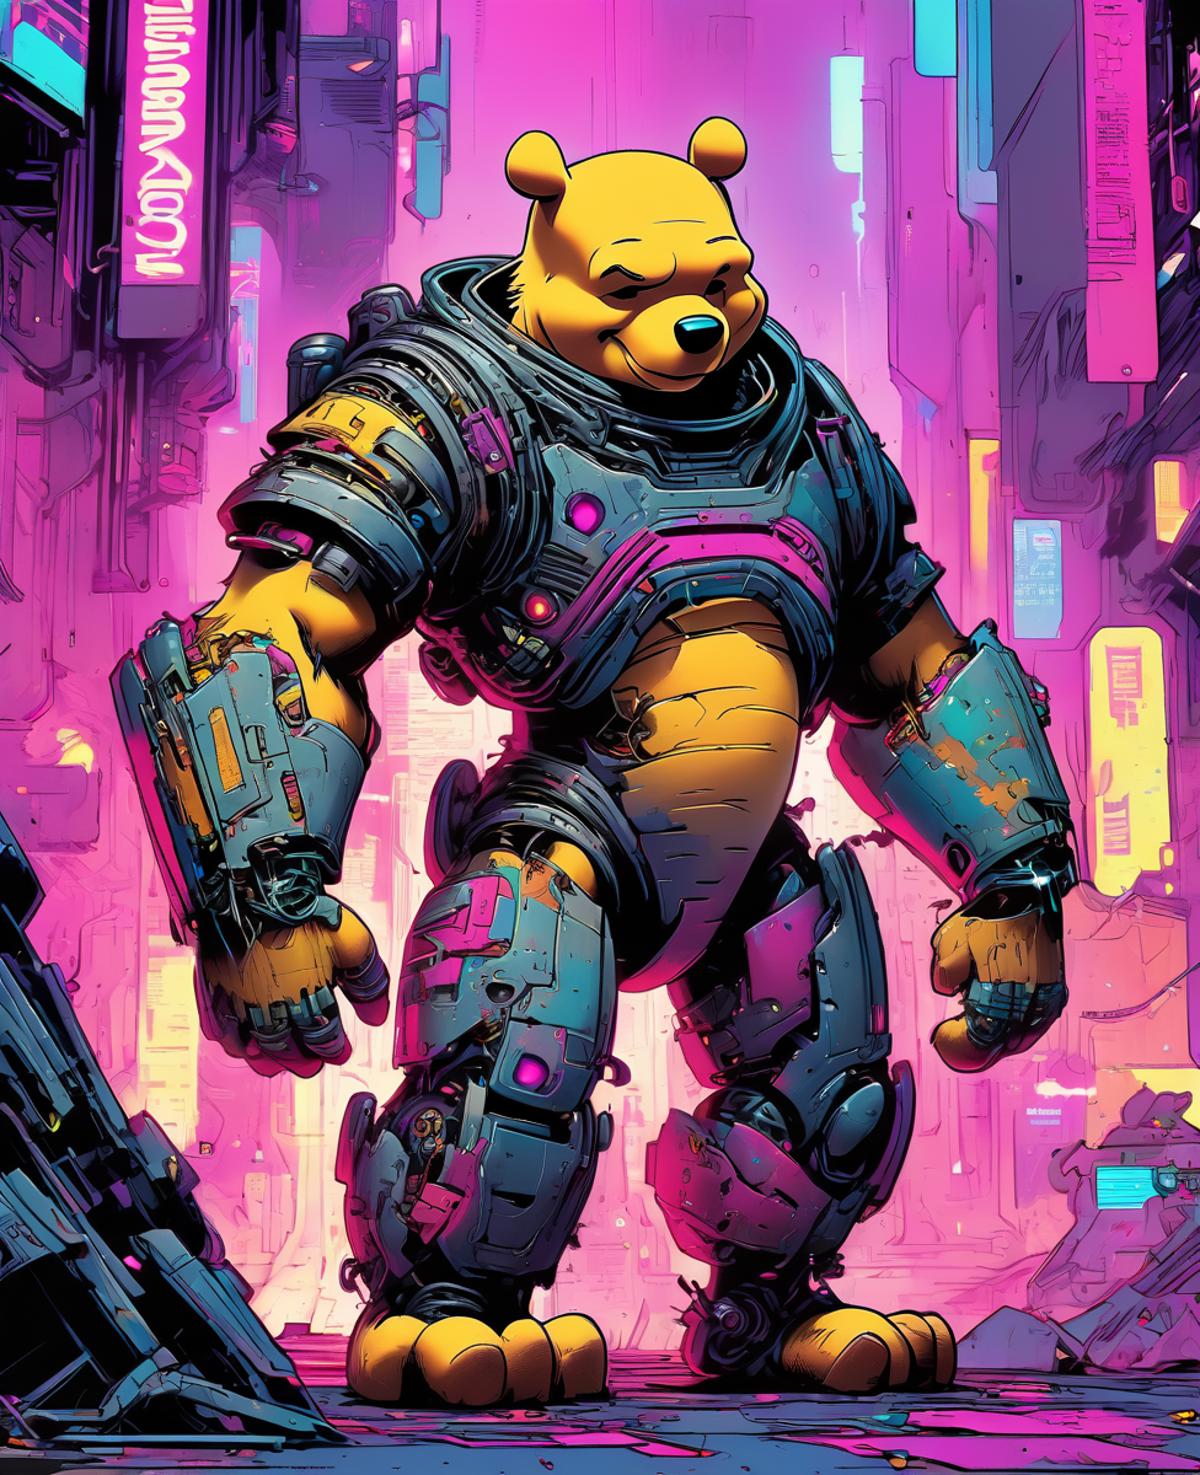 A giant robotic Winnie the Pooh in a futuristic cityscape.